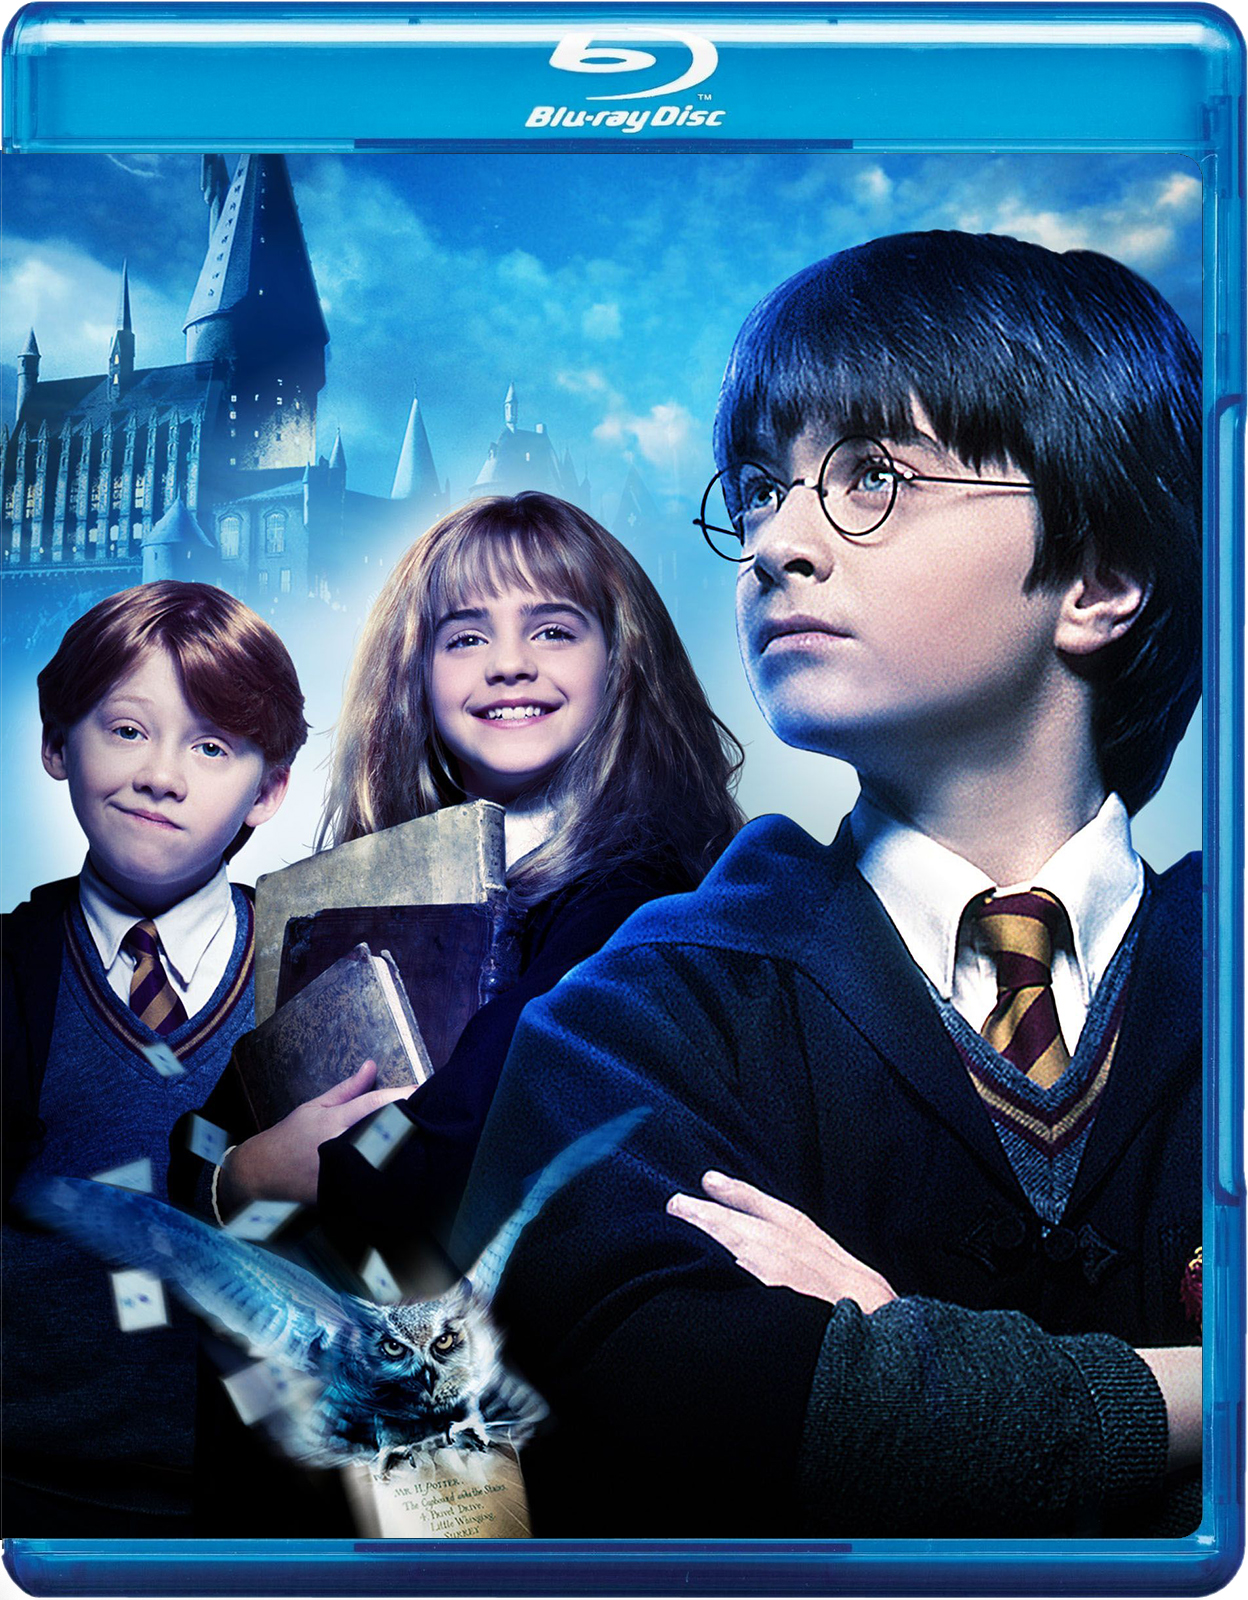 Stiahni si HD Filmy Harry Potter a Kamen mudrcu/ Harry Potter and the Philosopher's Stone (2001)(CZ/EN)[1080pHD] = CSFD 79%